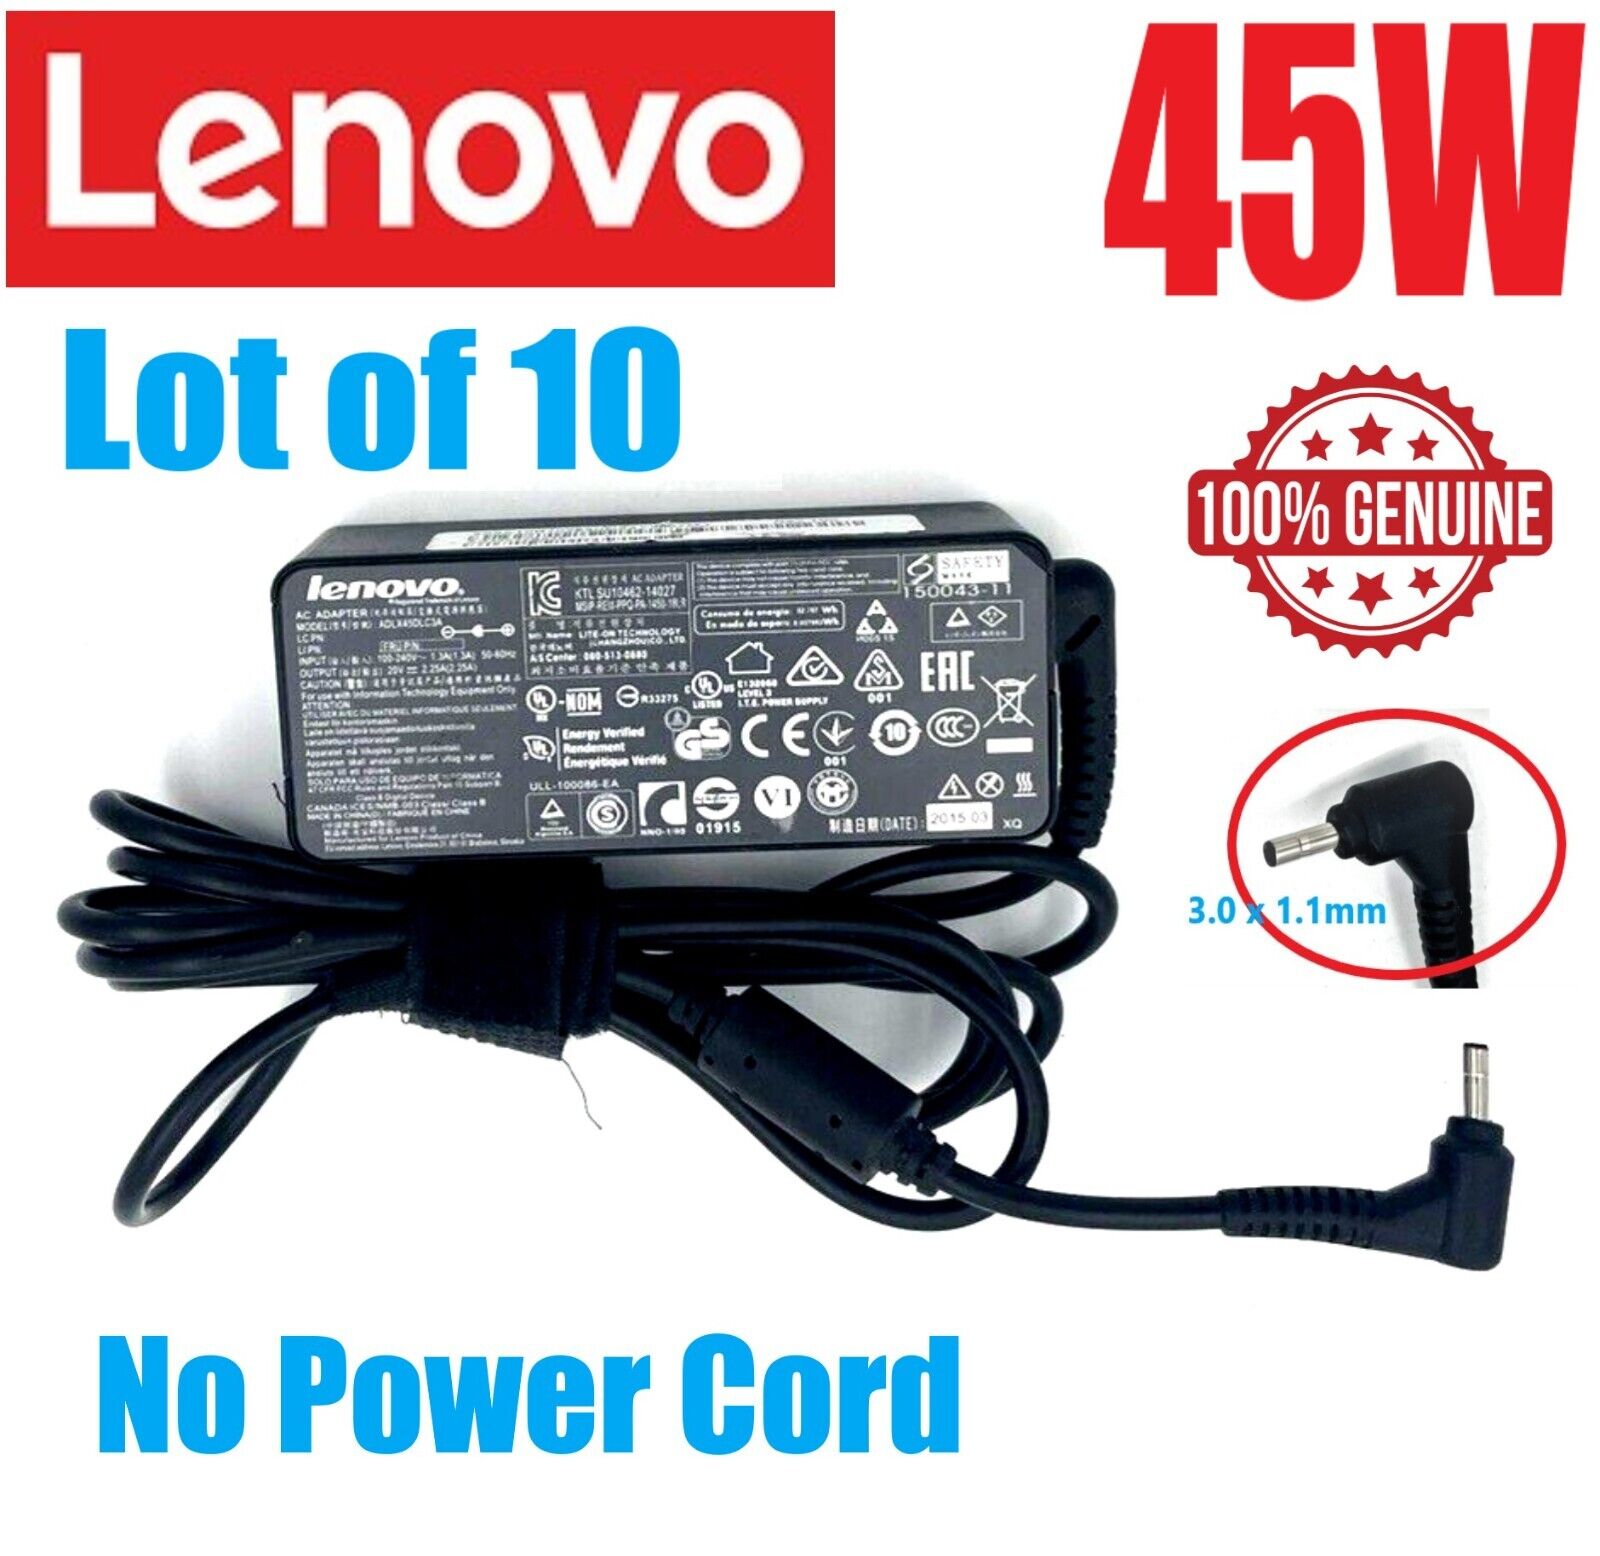 Lot of 10 Lenovo Laptop N21 Chromebook 45W AC Adapter No Power Cord ADLX45DLC3A